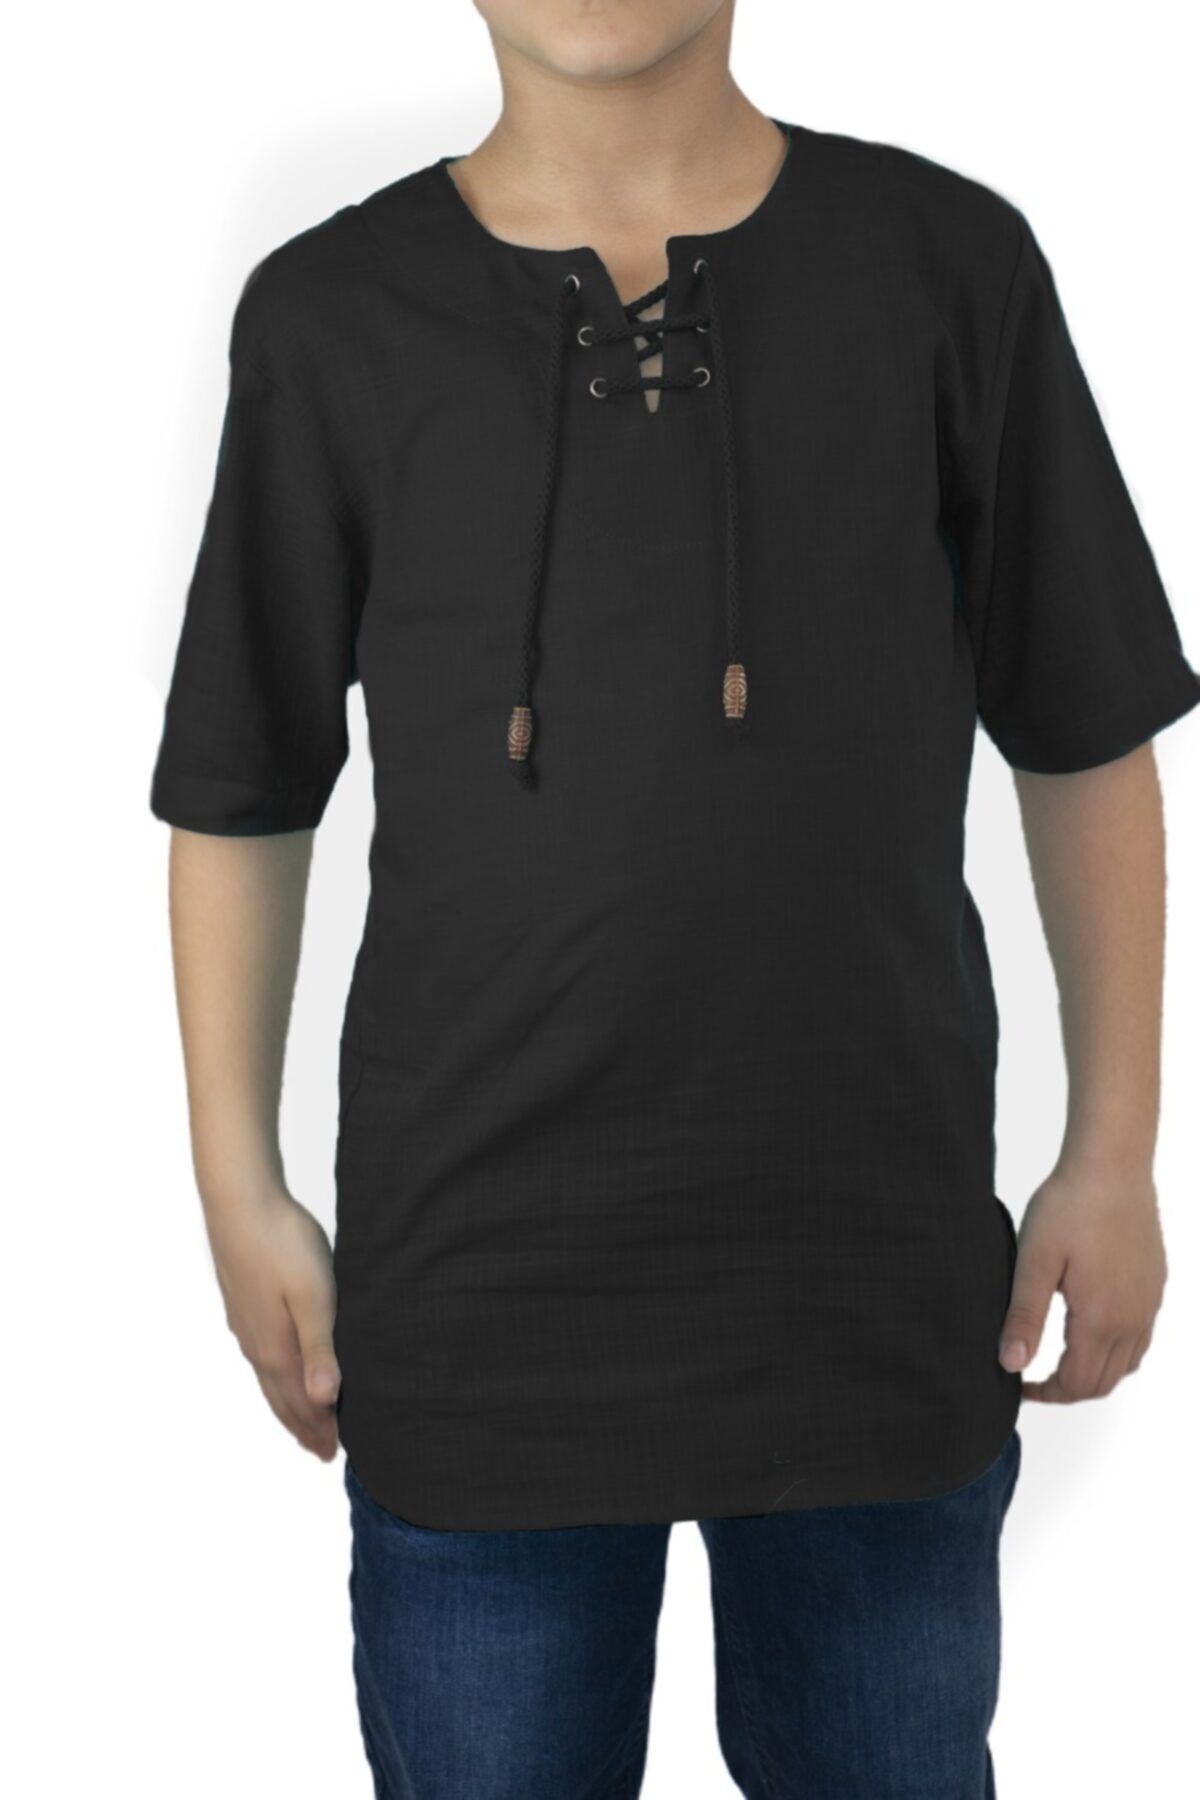 Eliş Şile Bezi تی شرت پسرانه منگنه دار پارچه ای شیله آستین کوتاه مشکی 3003